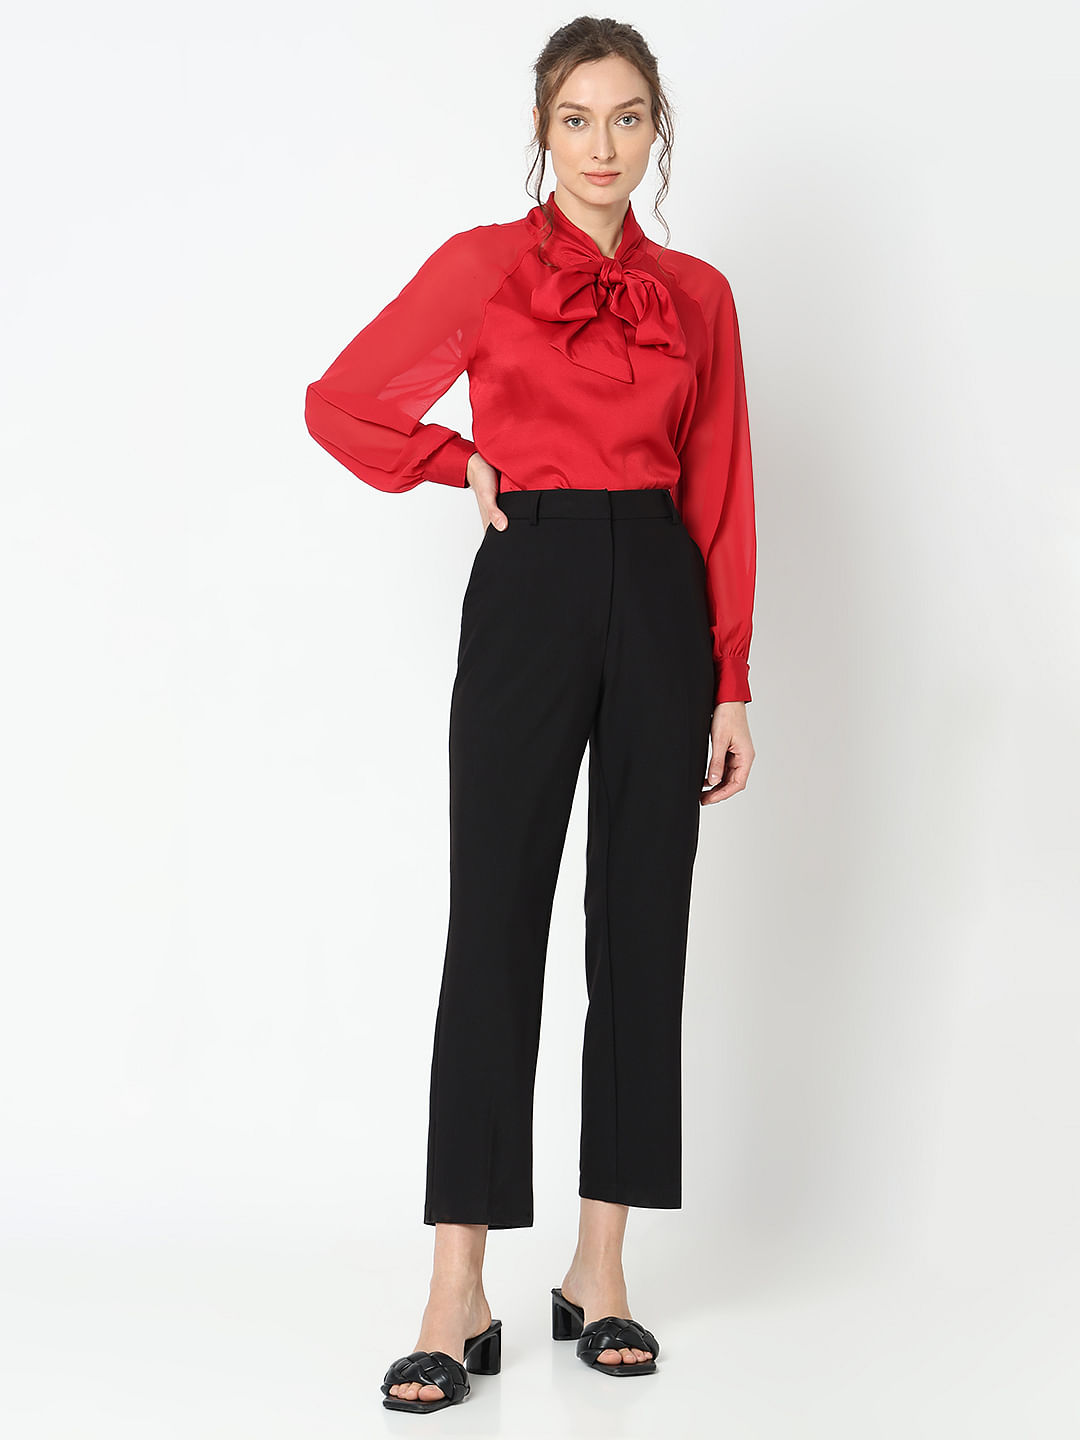 Young Woman Red Shirt Black Pants Stock Photo 105356594 | Shutterstock